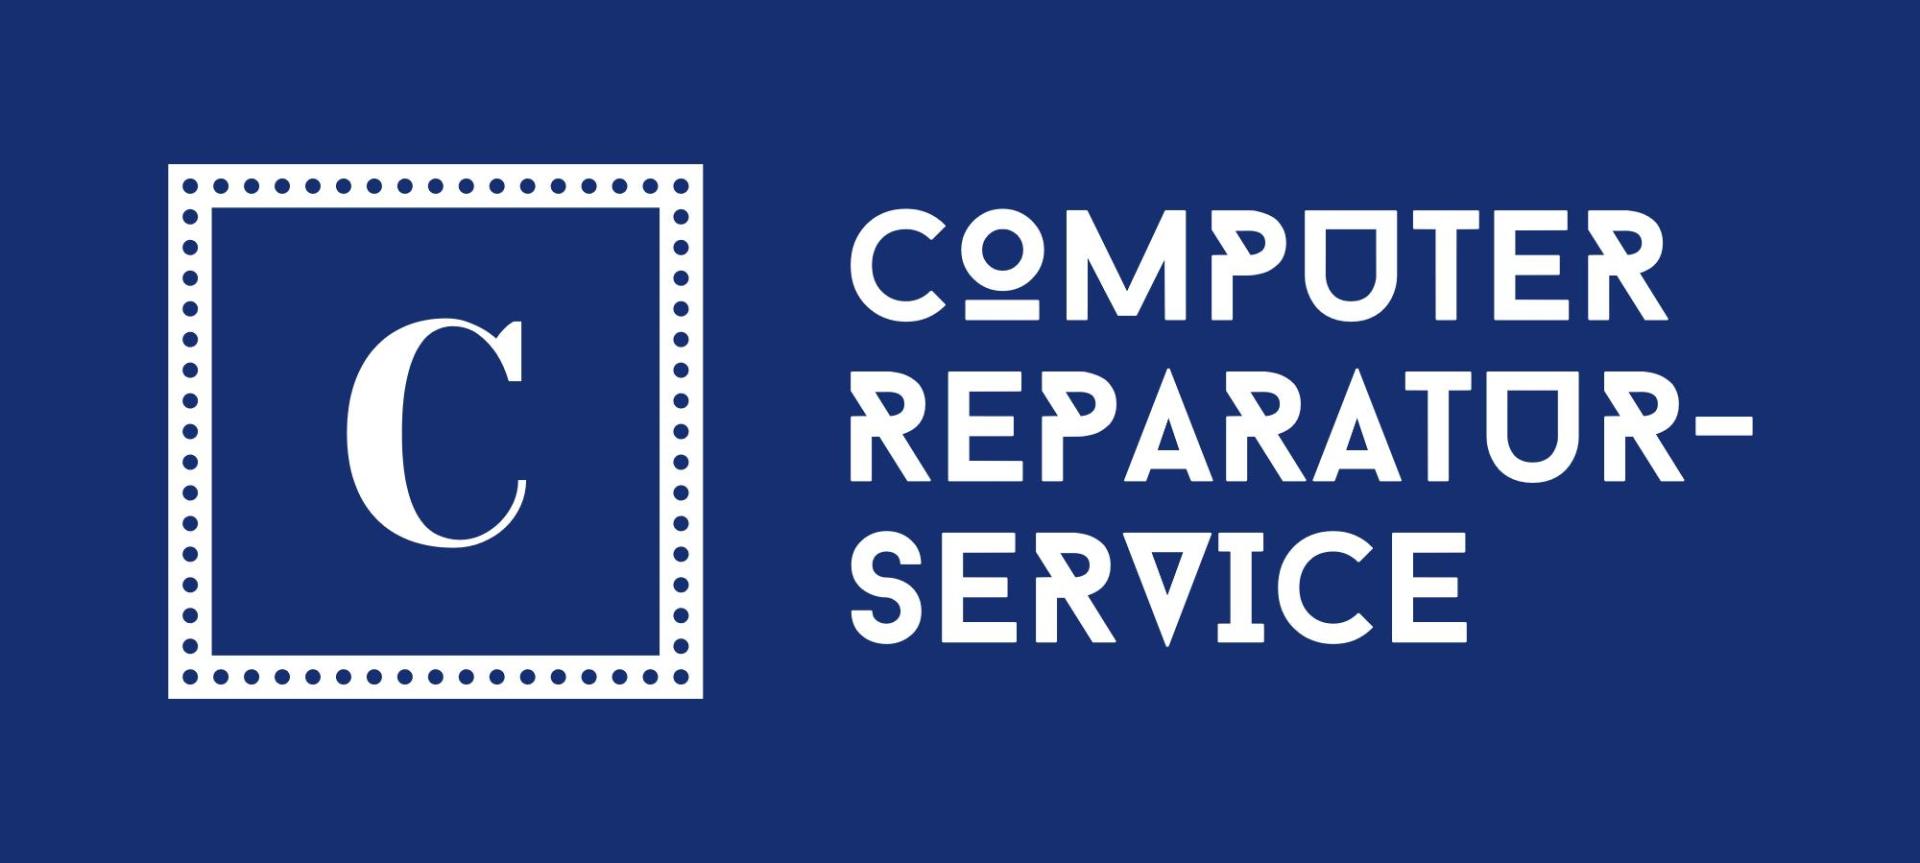 Computer Reparatur-Service Logo